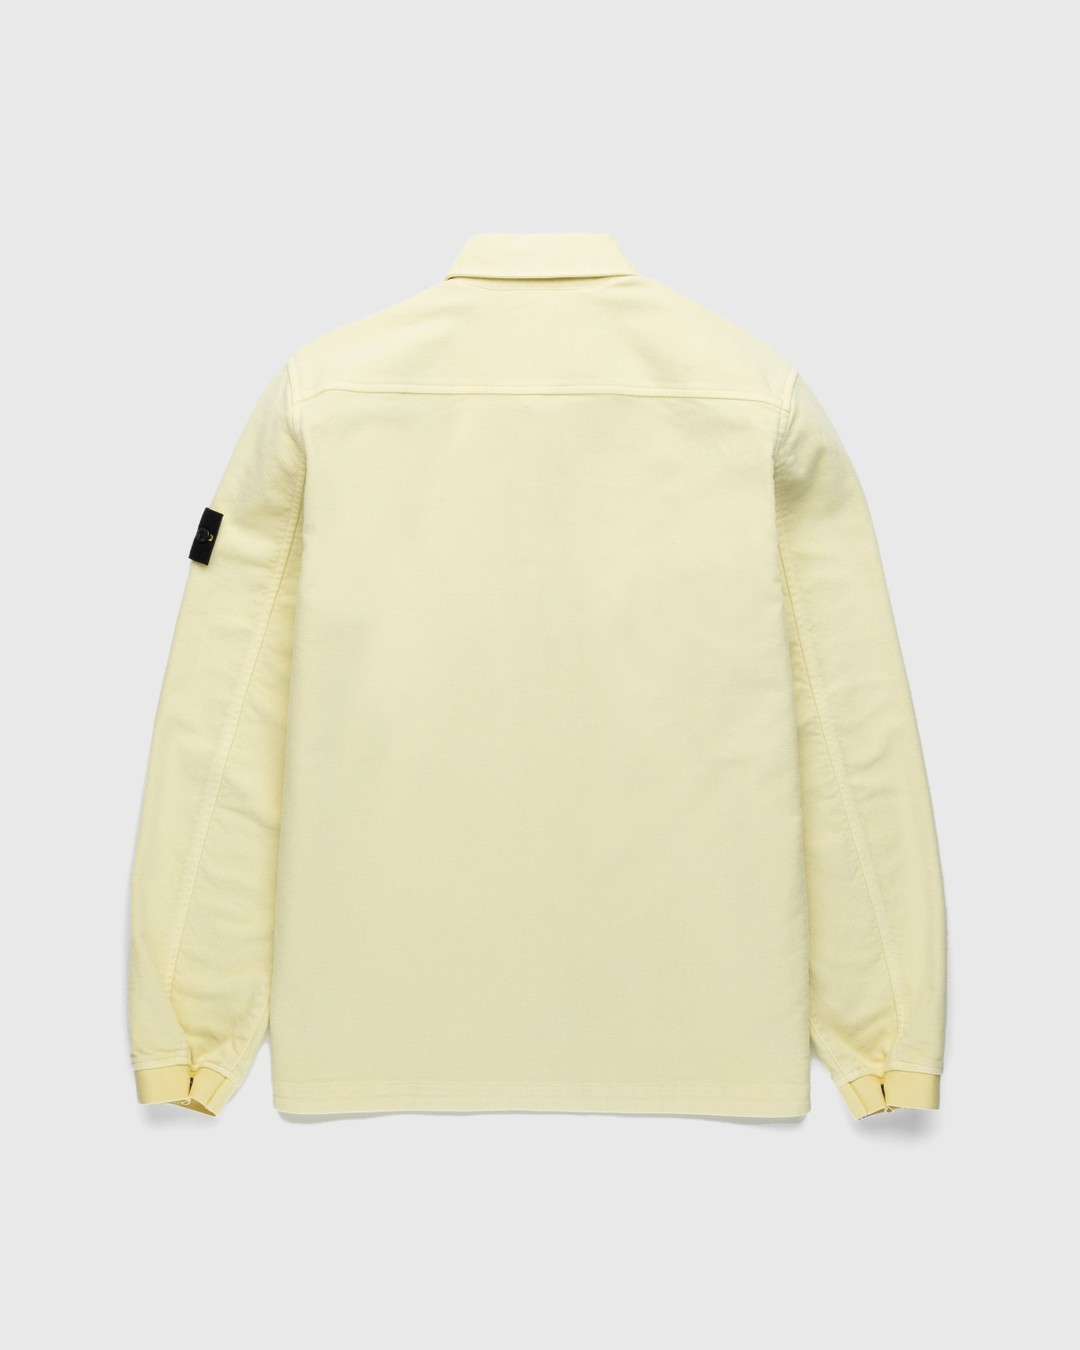 Stone Island – Garment-Dyed Cotton Overshirt Butter - Overshirt - Beige - Image 2